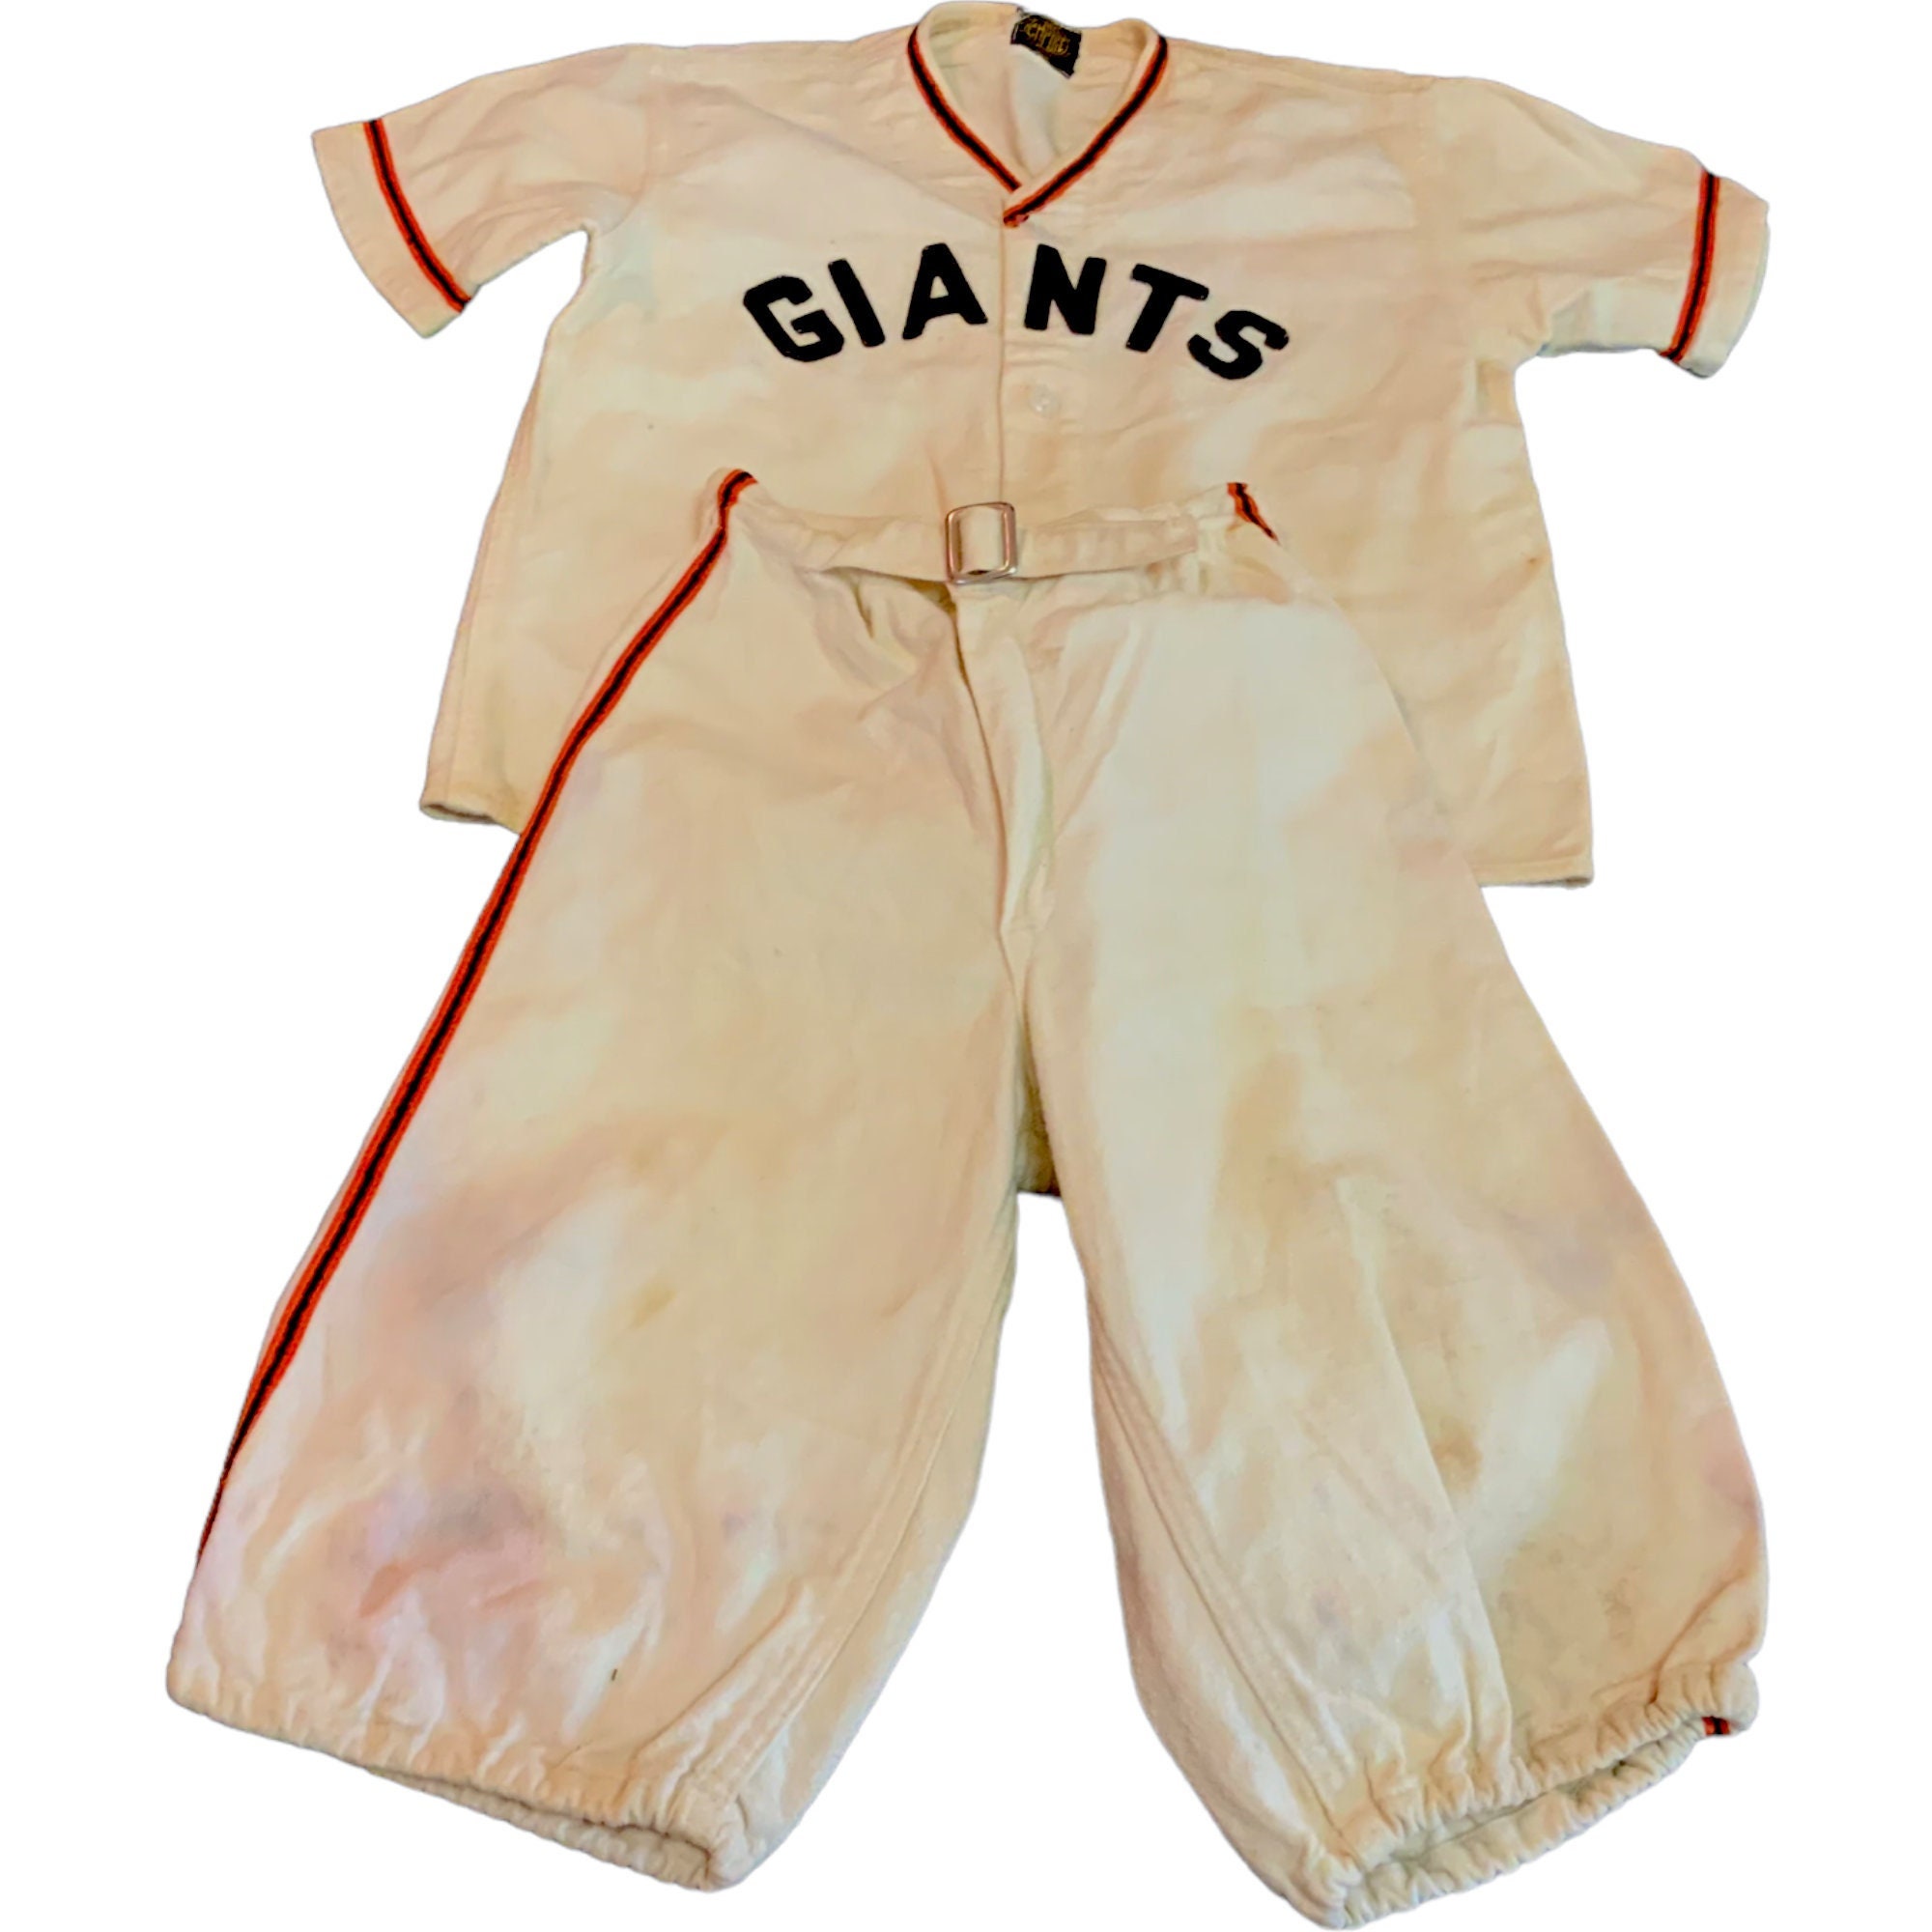 Vintage New York Giants MLB Baseball Uniform 1940s or Earlier 